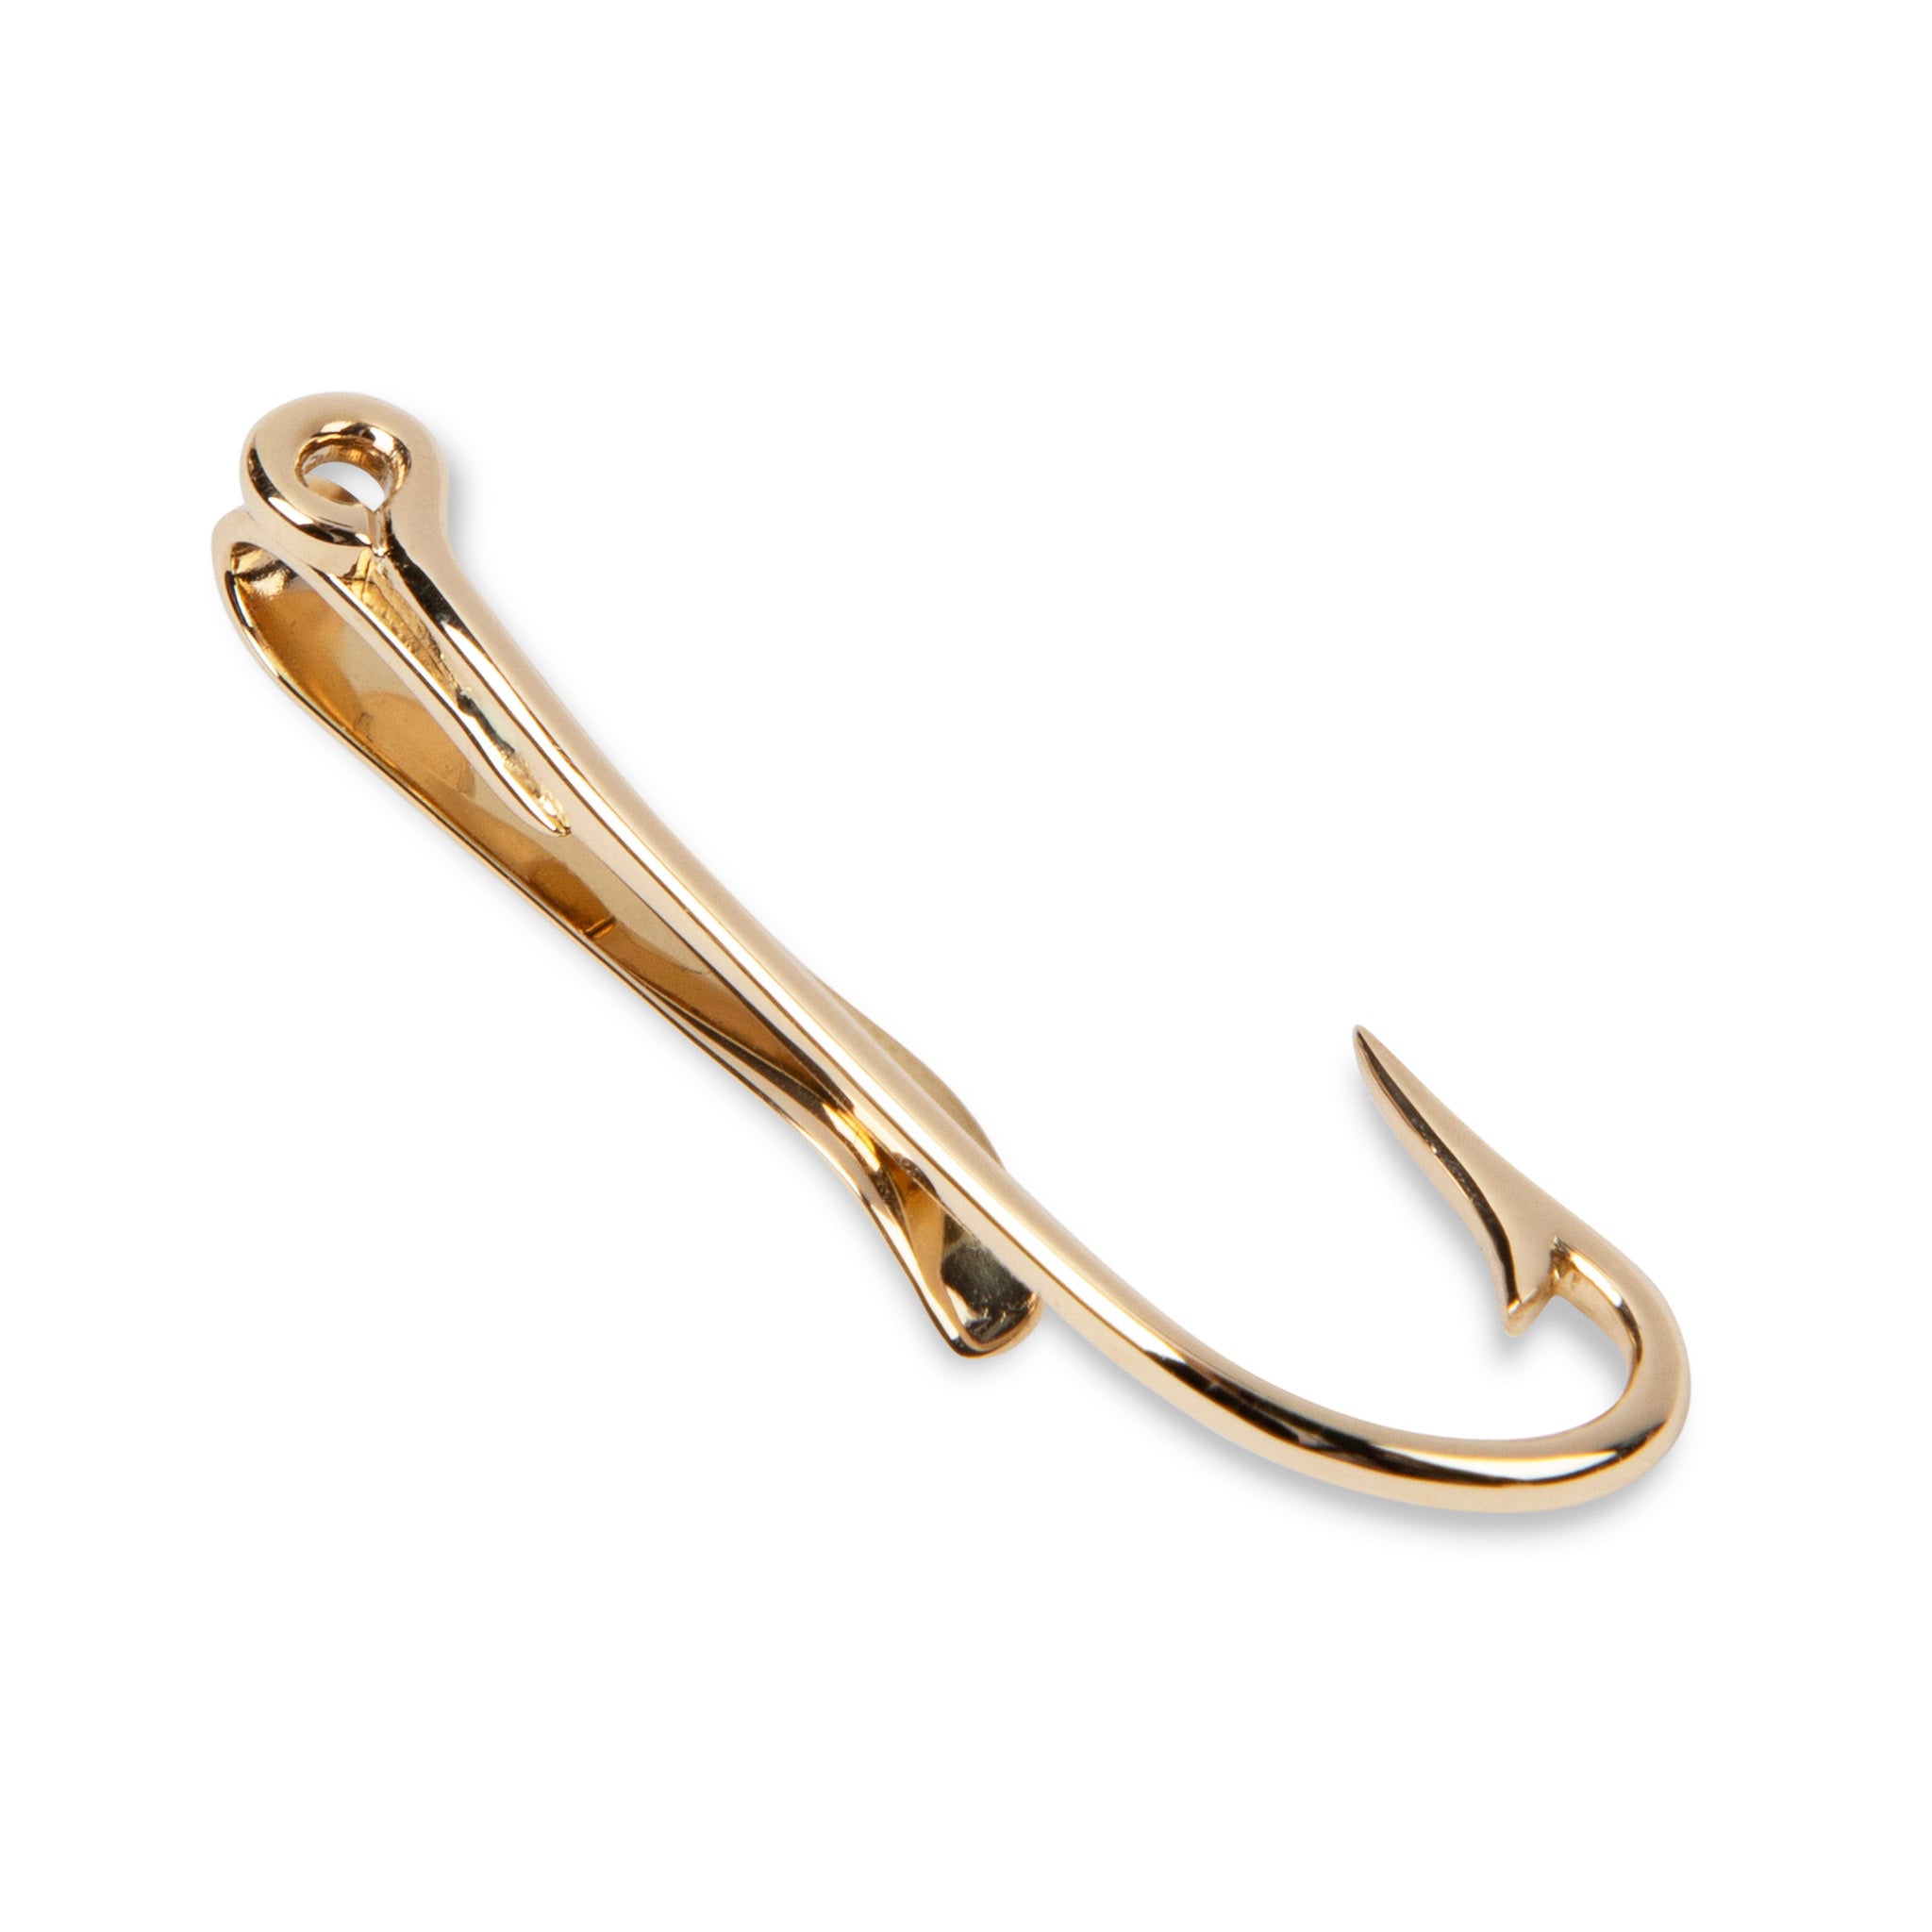 Vintage Tiffany & Co. 14k Gold Fish Hook Tie Clip